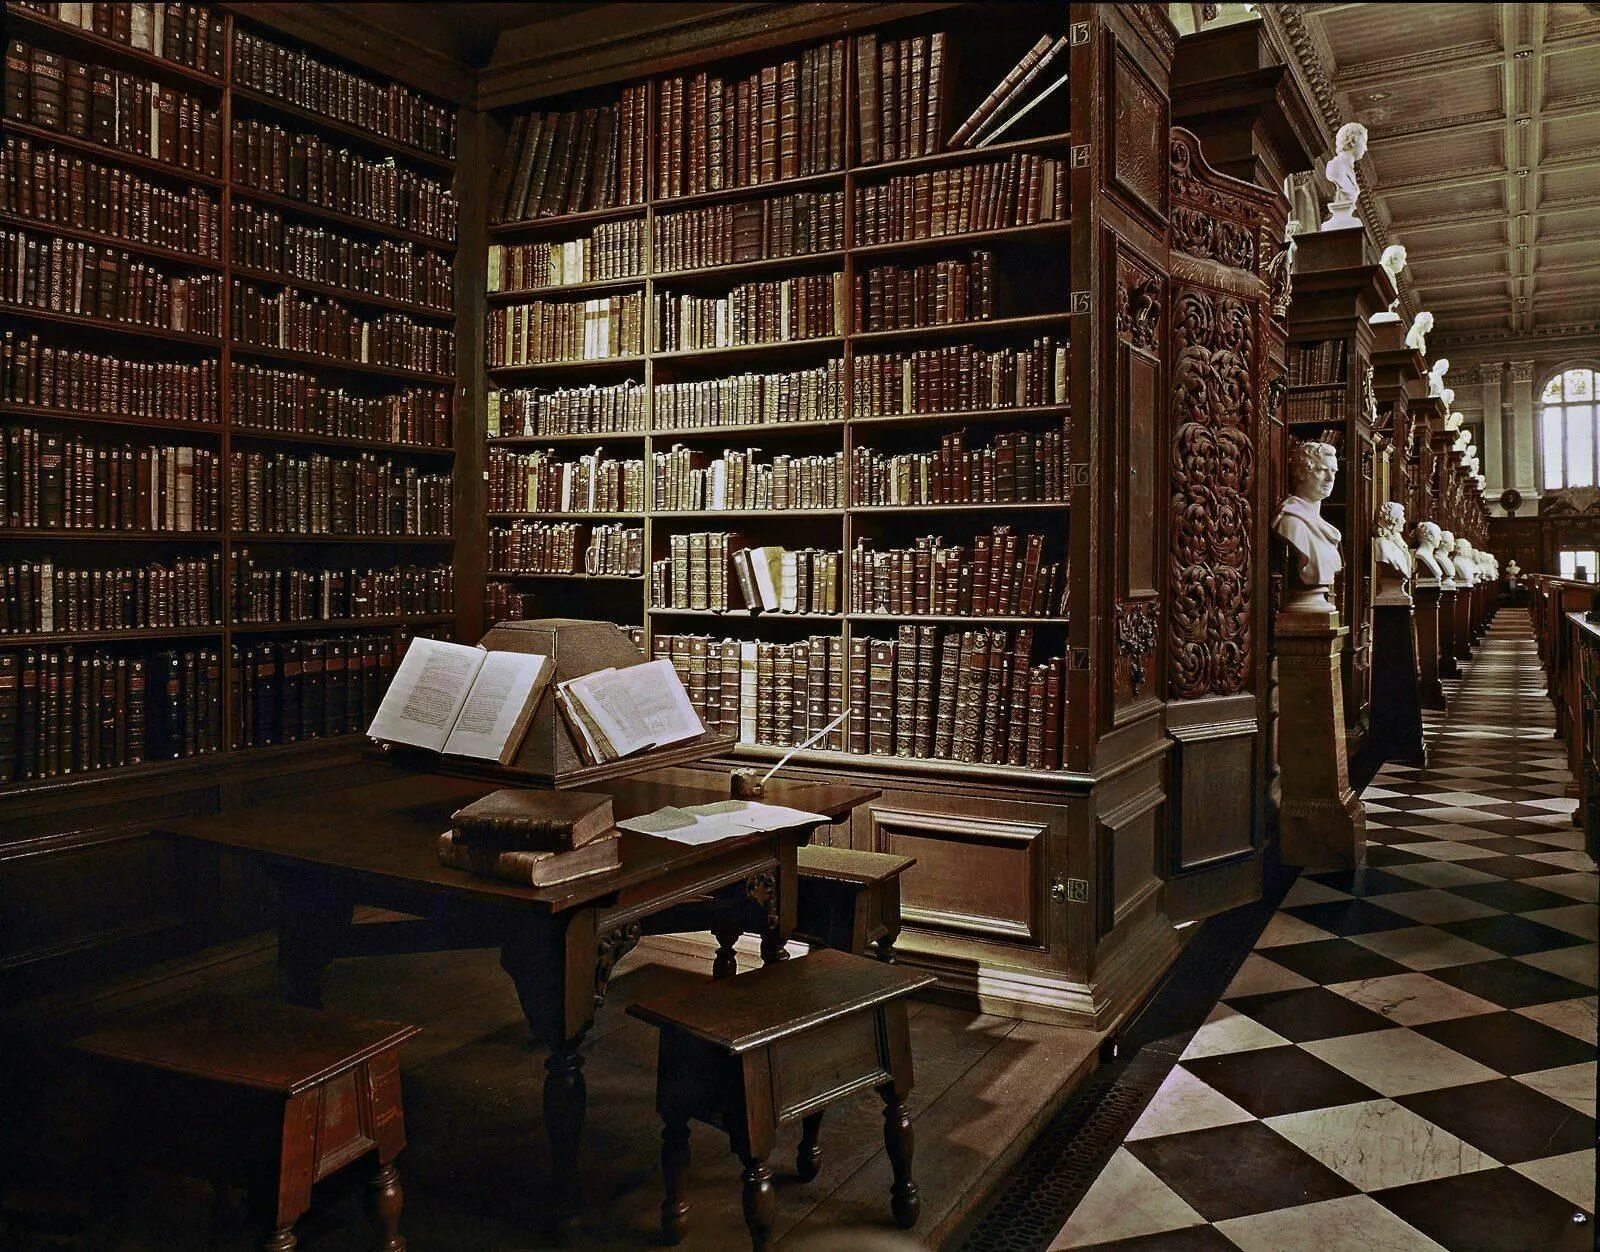 Старинная библиотека. Красивая библиотека. Библиотека Эстетика. Библиотека старинных книг. Picture libraries